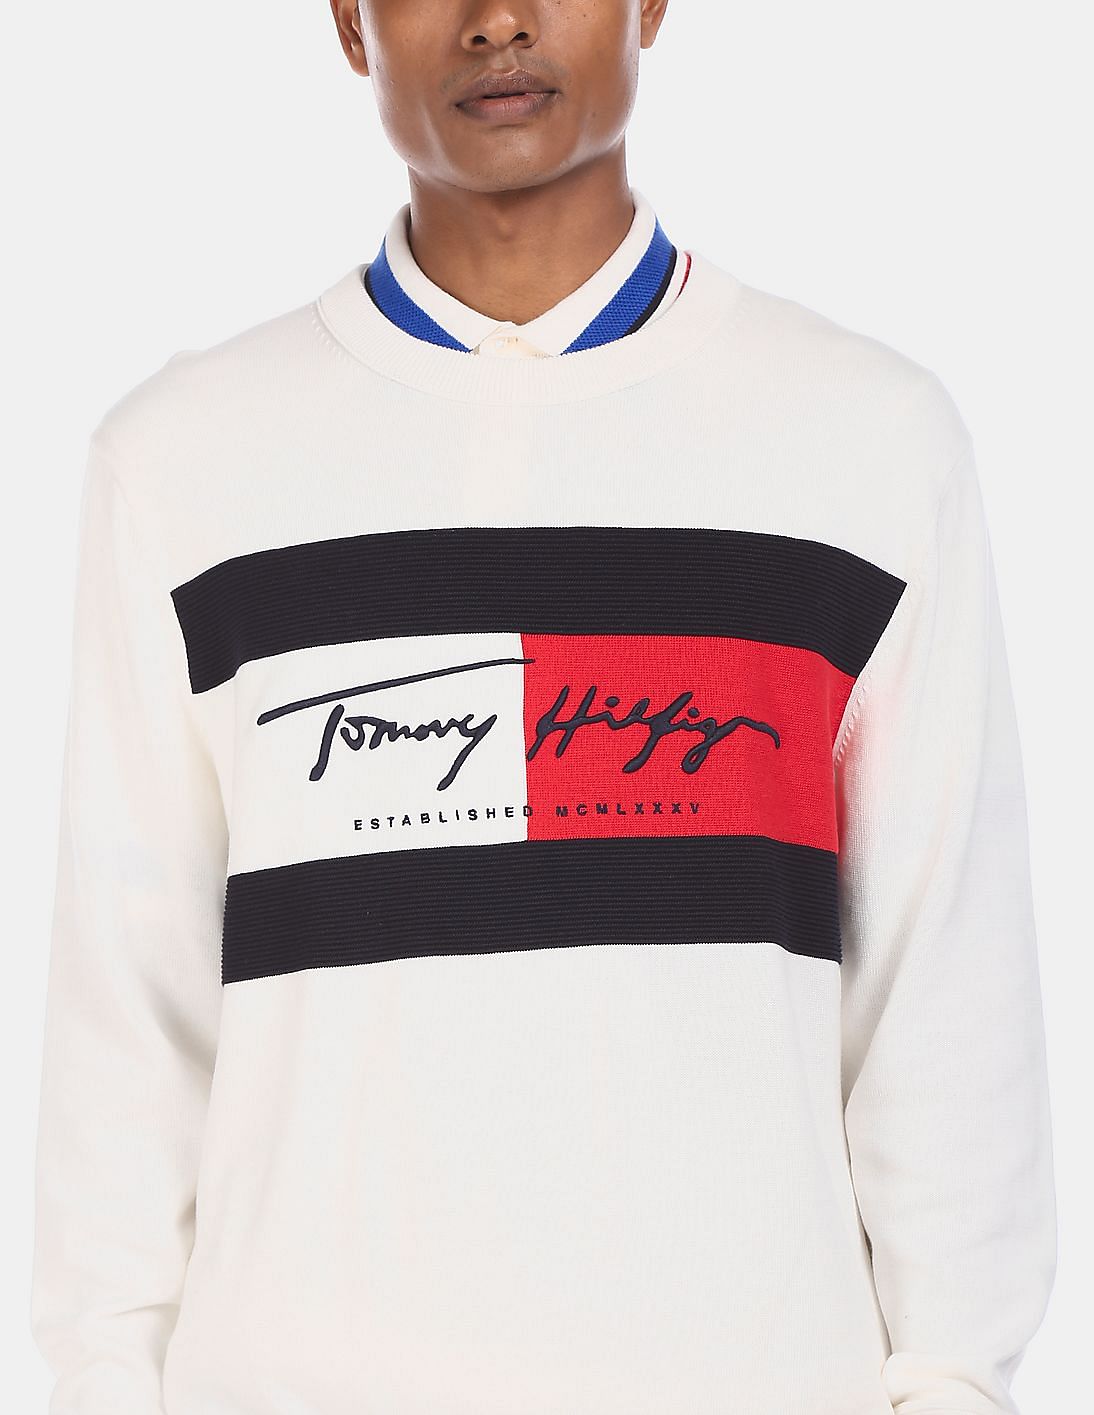 Sweater Buy Hilfiger Tommy Autograph Men Flag Neck Crew White